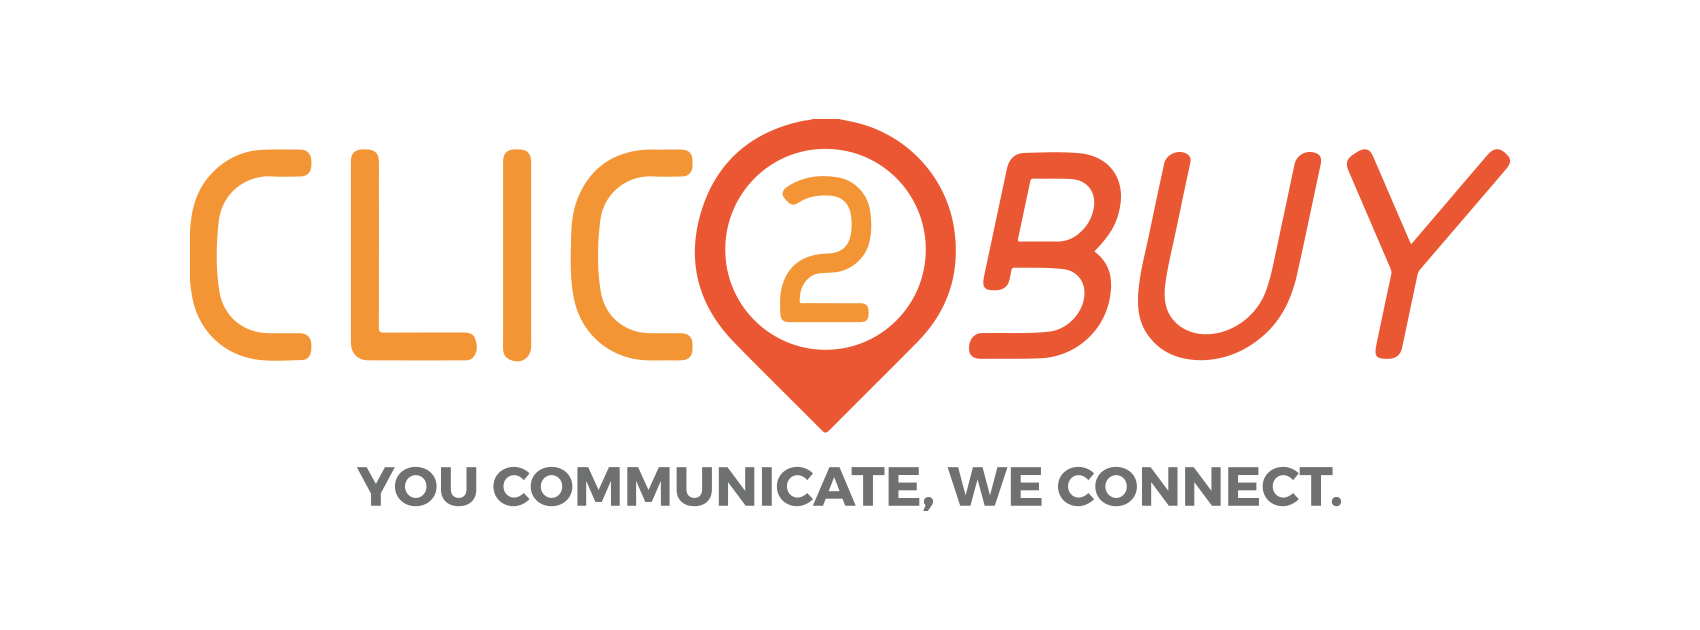 Buy.com Logo - Solution de Where to Buy pour vos supports de communication